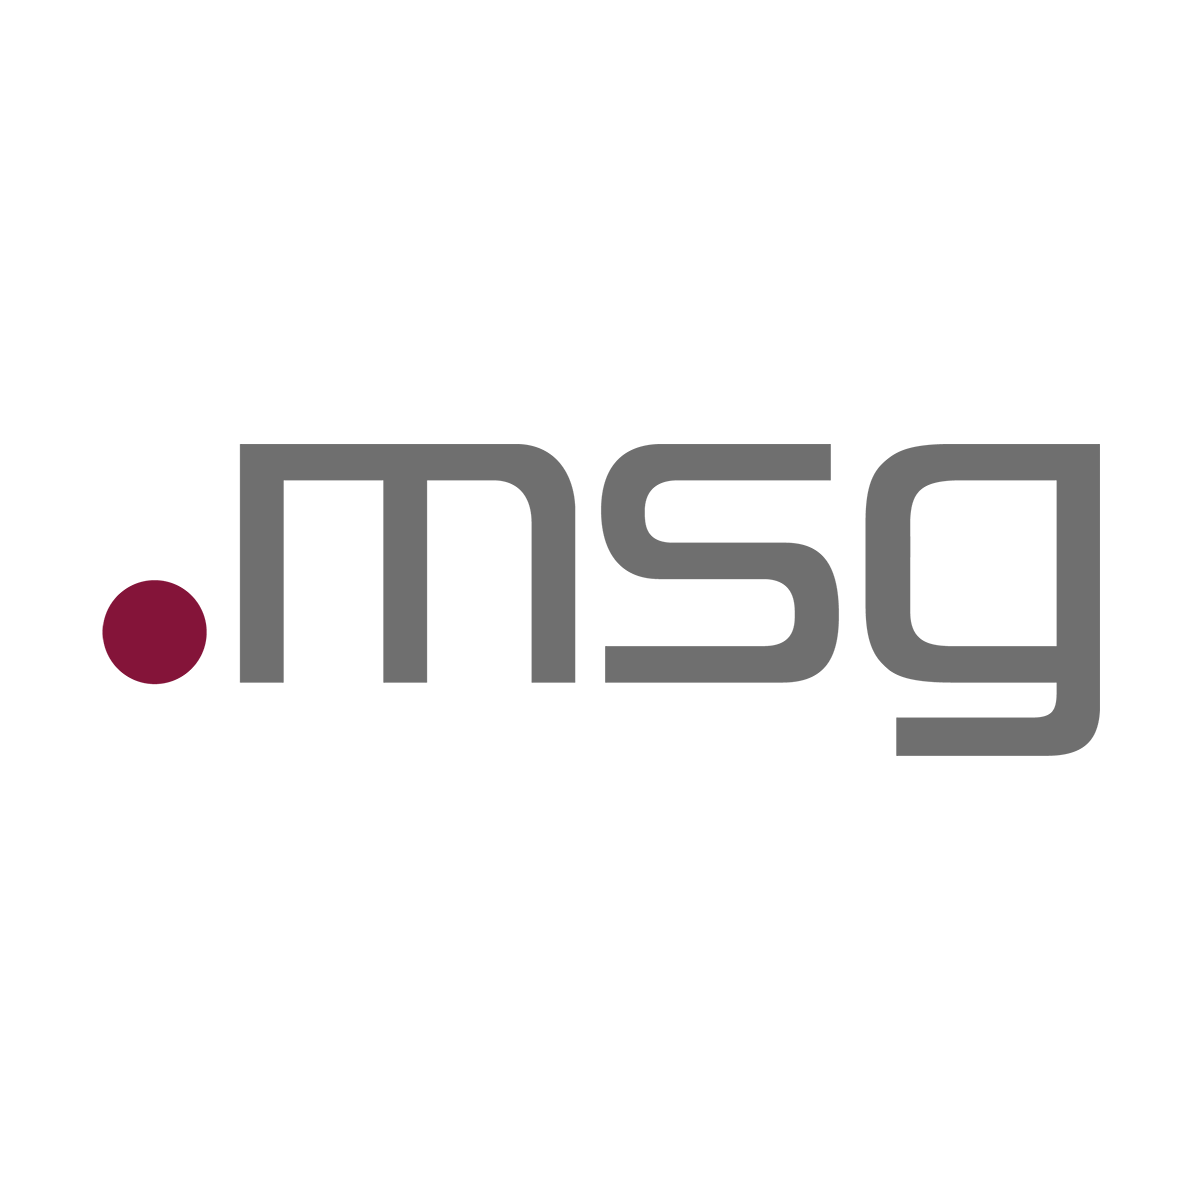 msg systems Romania